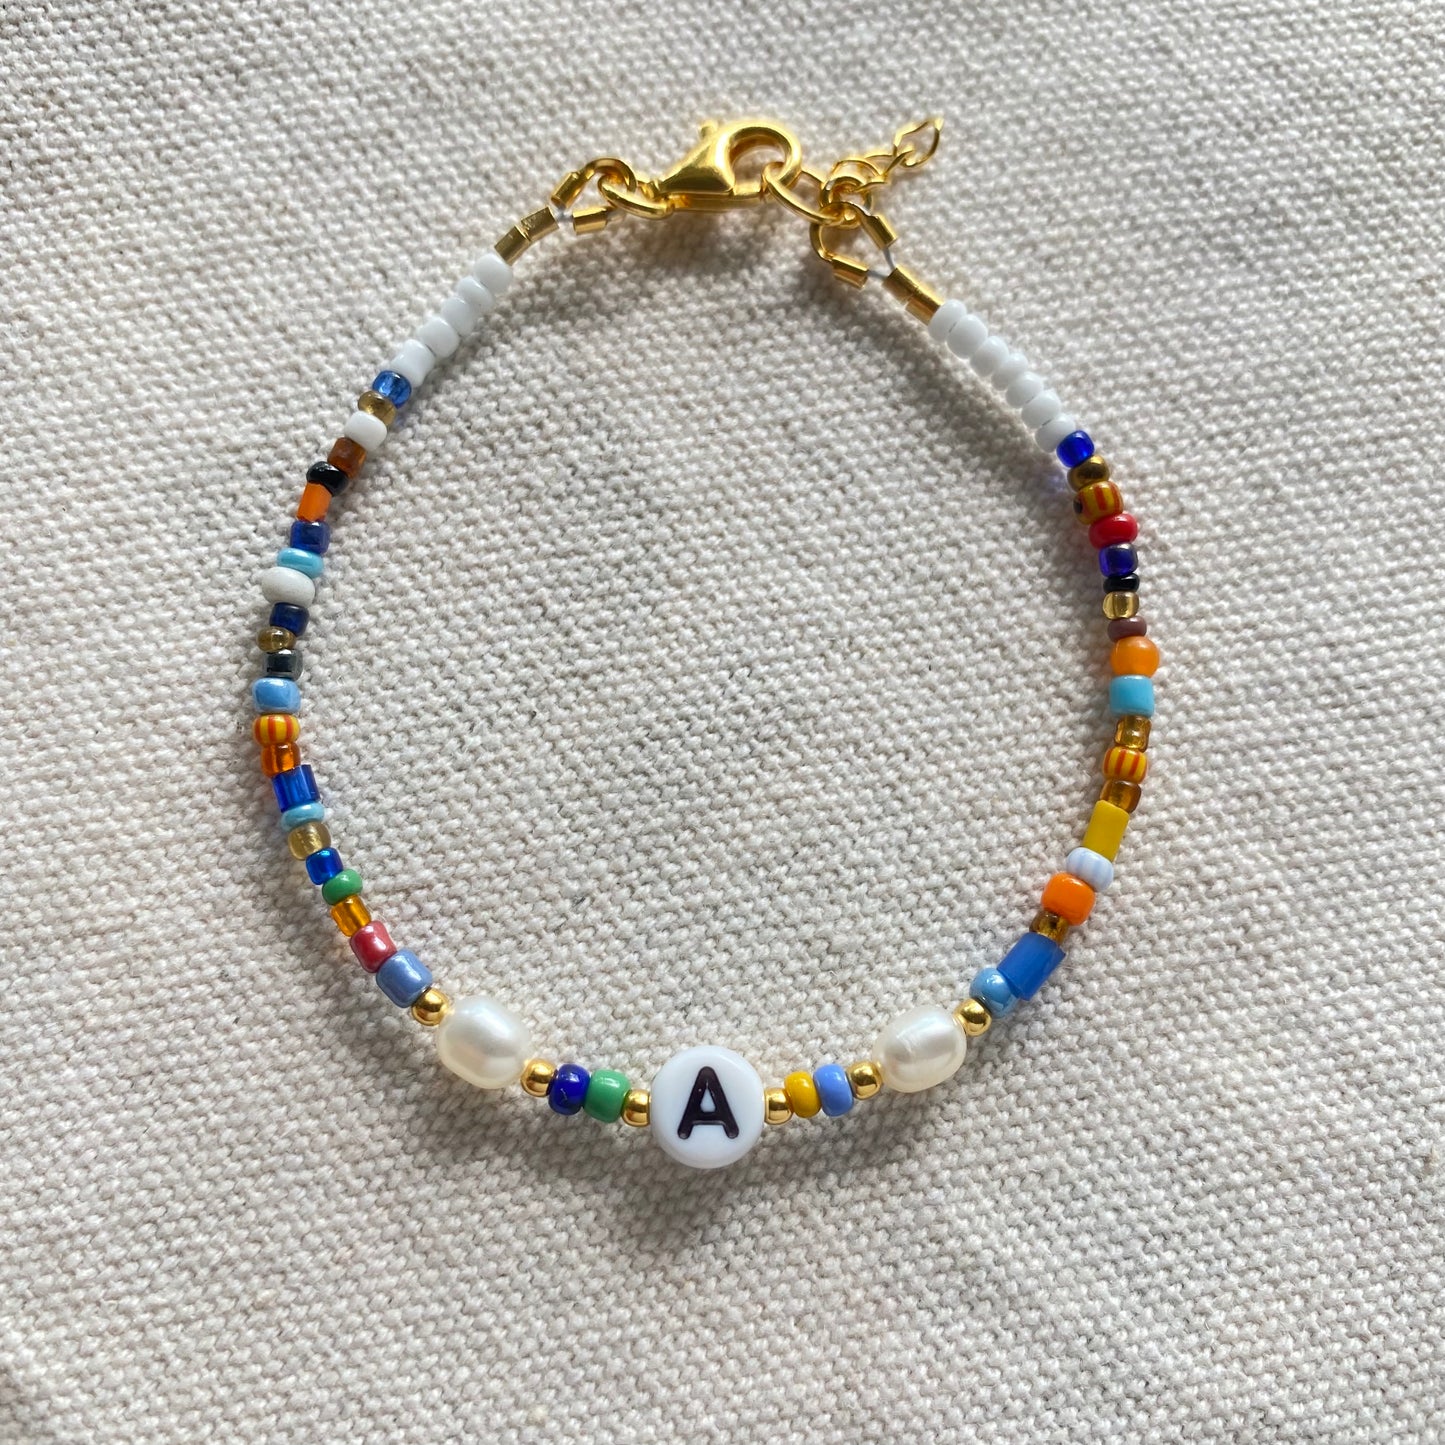 Personalised Bracelet with Freshwater Pearls